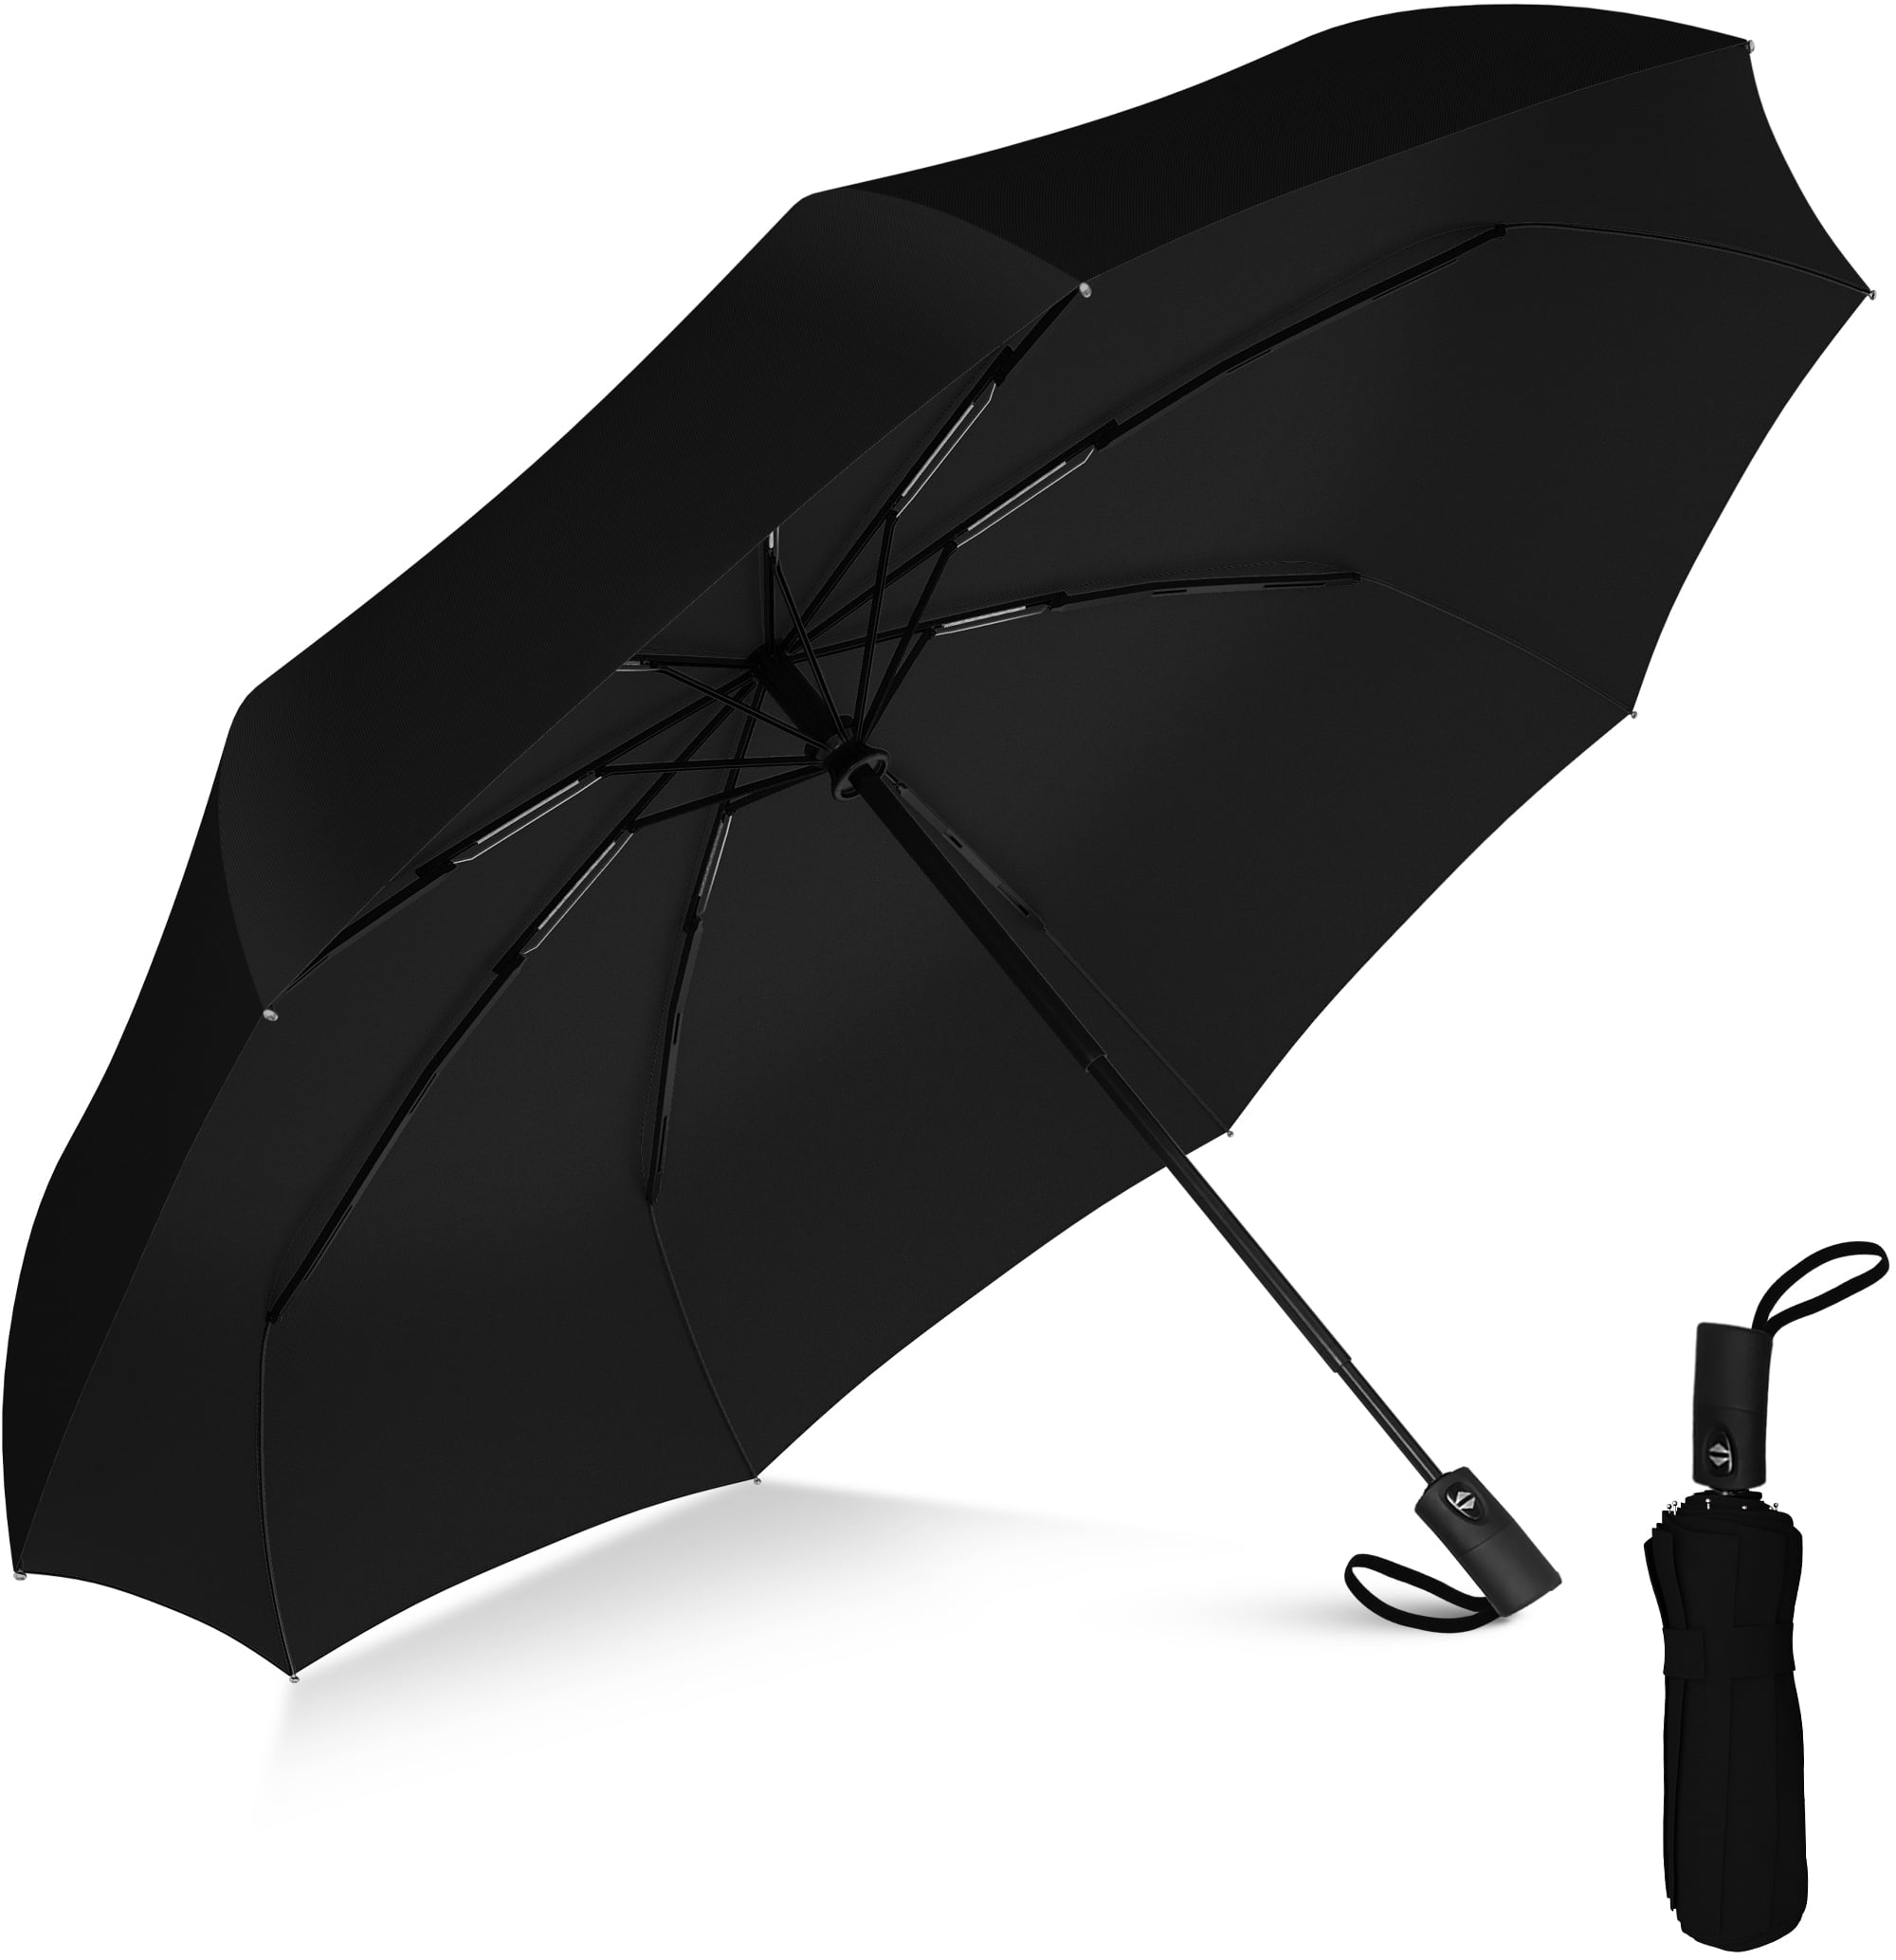 GXF Travel Outdoor Waterproof Sunscreen Sun Umbrella Folding Umbrella Color : Pink